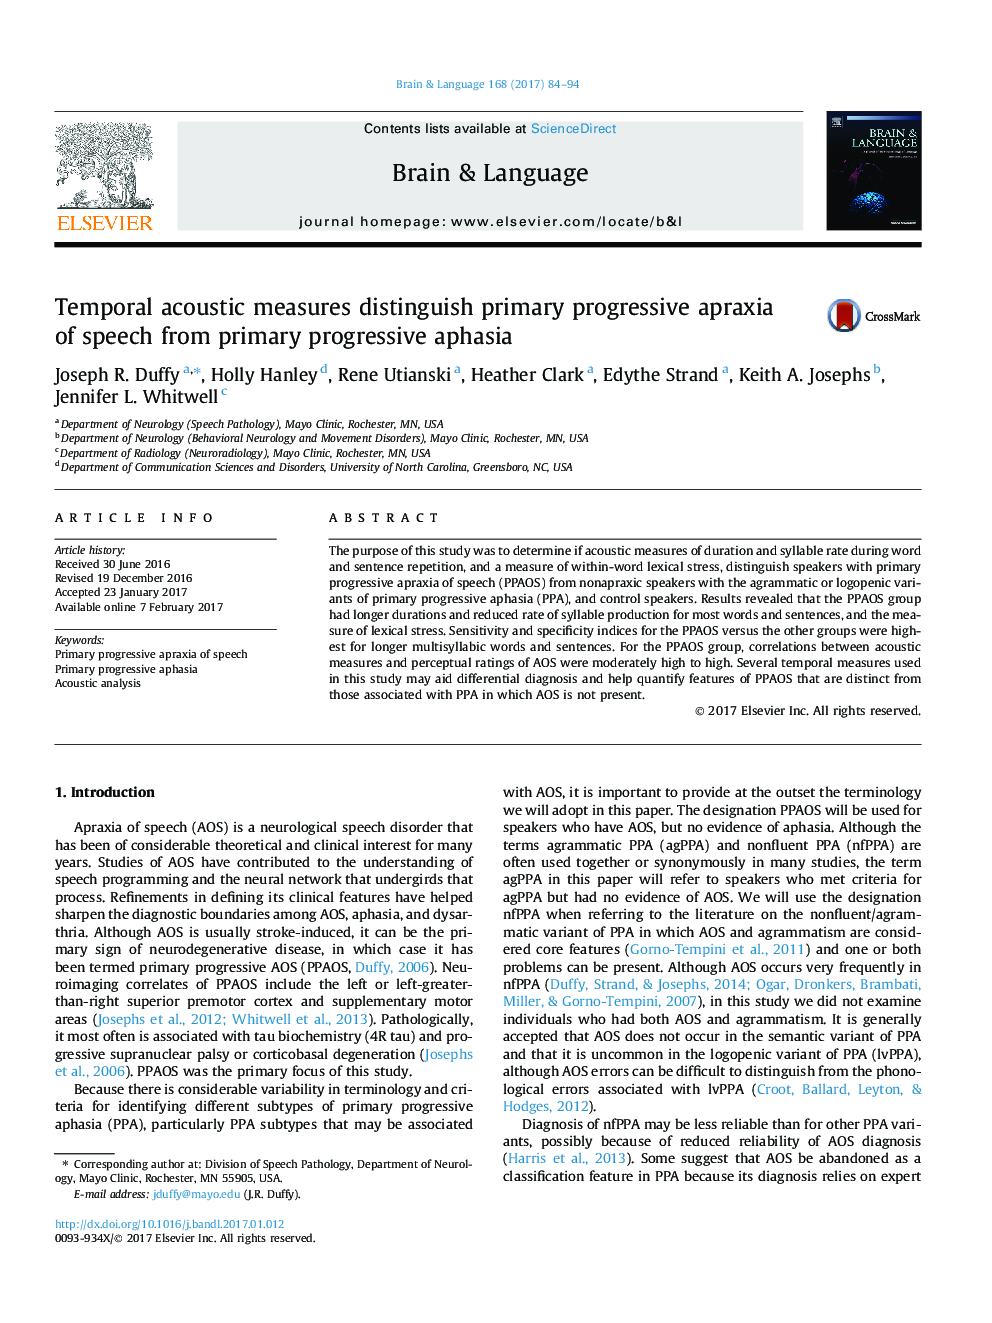 Temporal acoustic measures distinguish primary progressive apraxia of speech from primary progressive aphasia